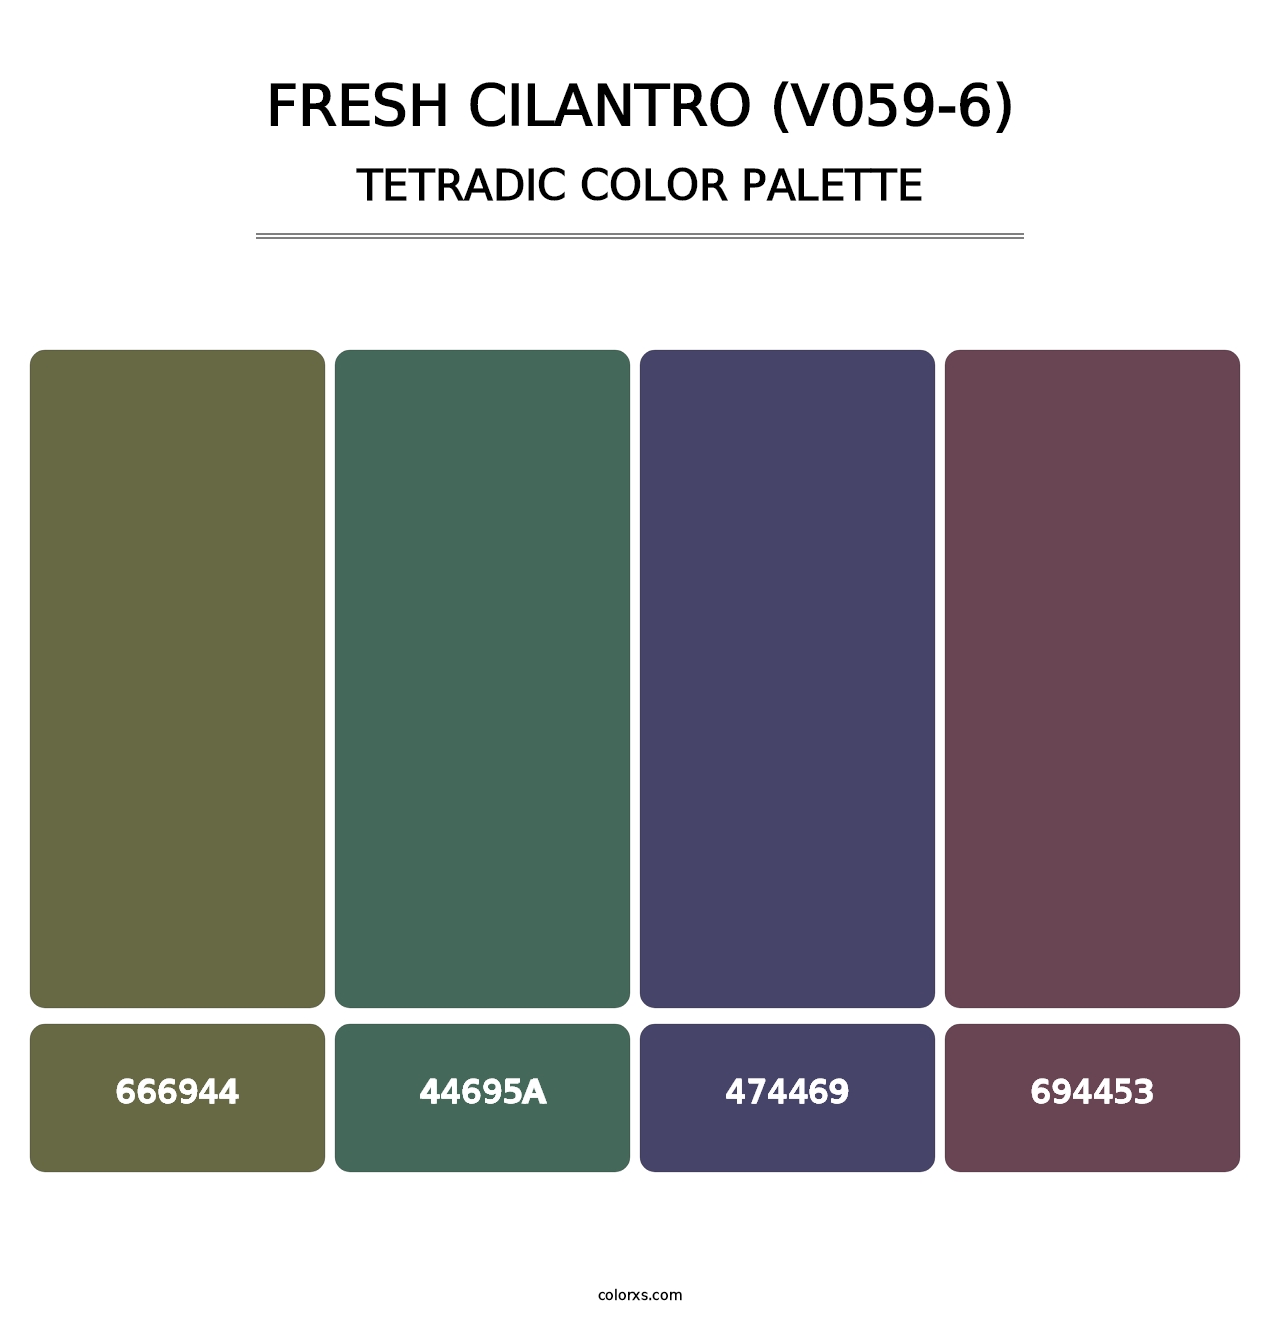 Fresh Cilantro (V059-6) - Tetradic Color Palette